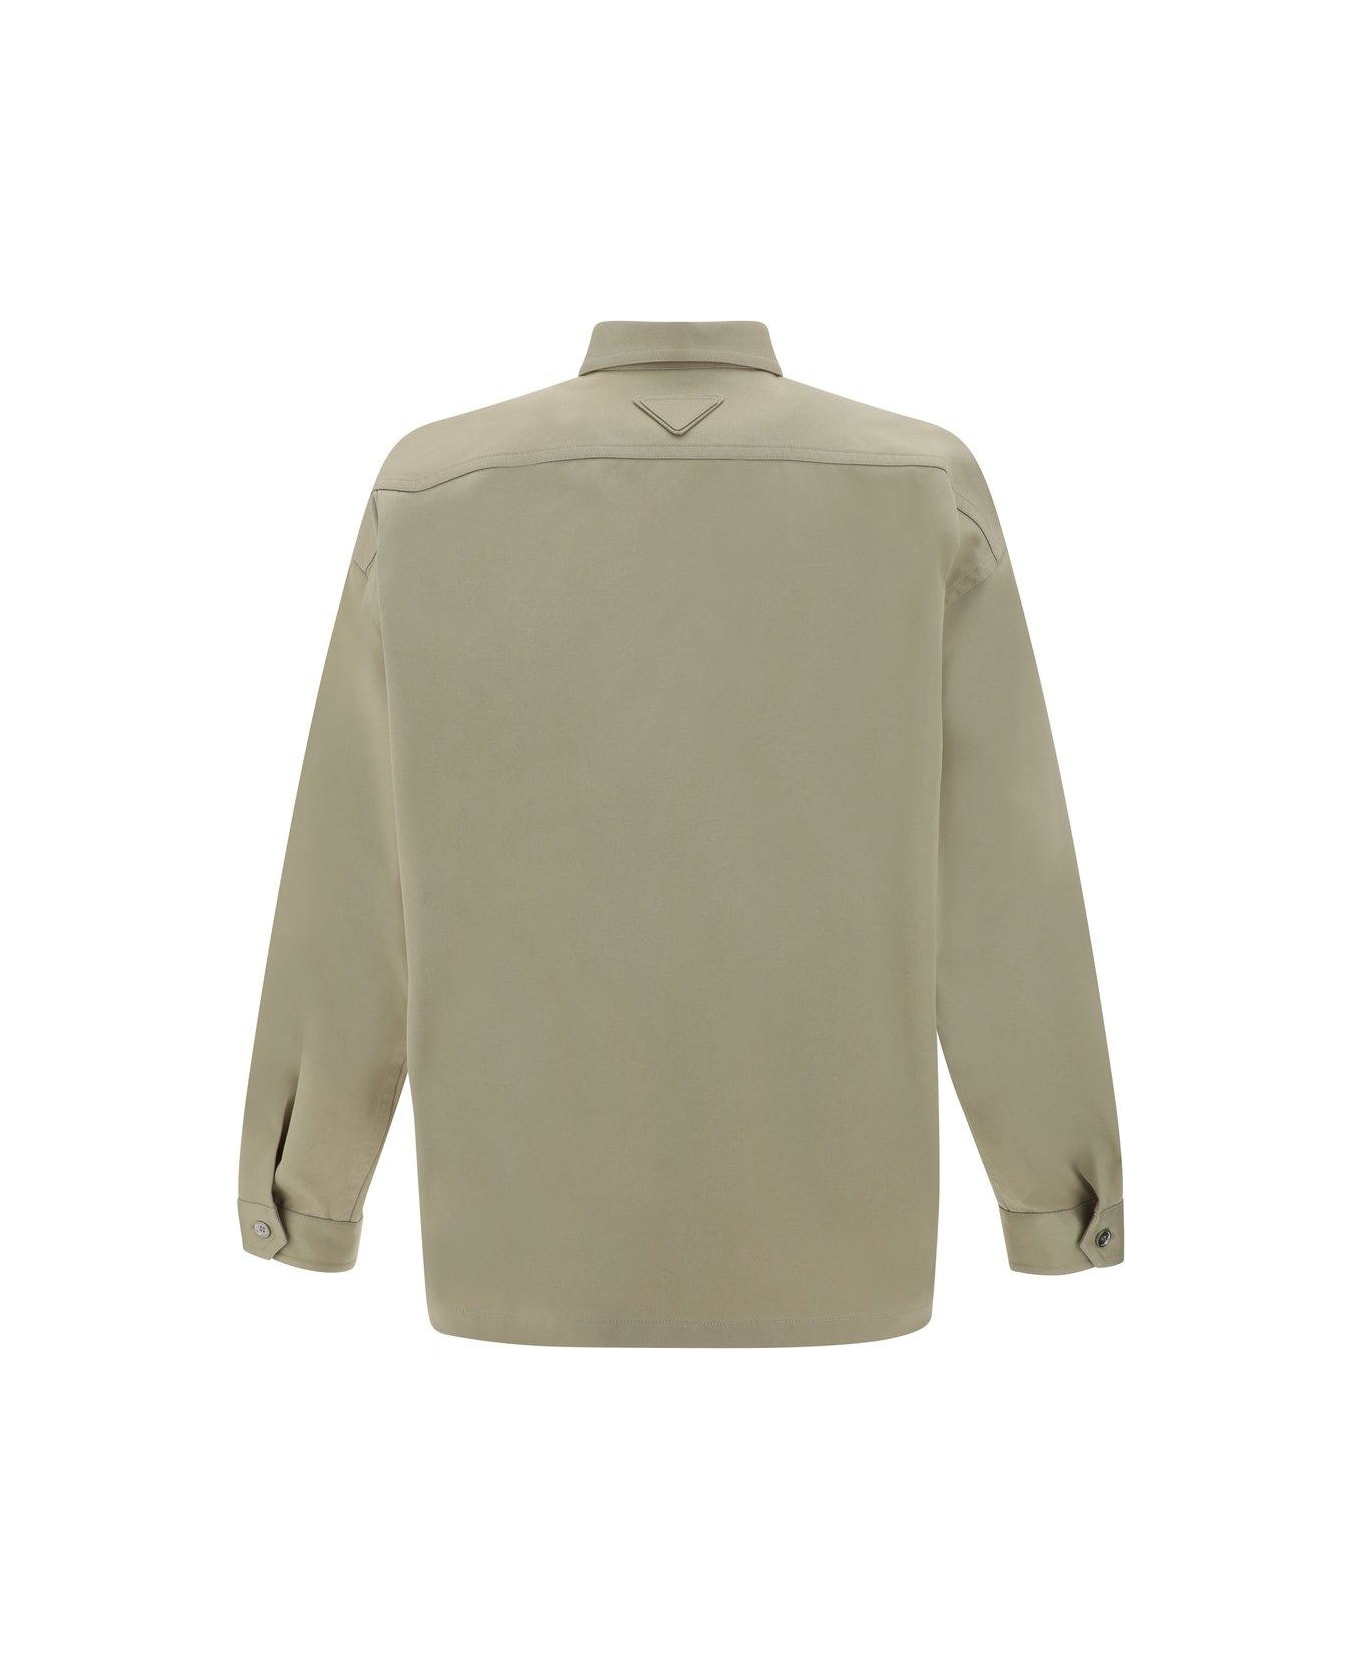 Prada Monochrome Button Up Shirt - Corda